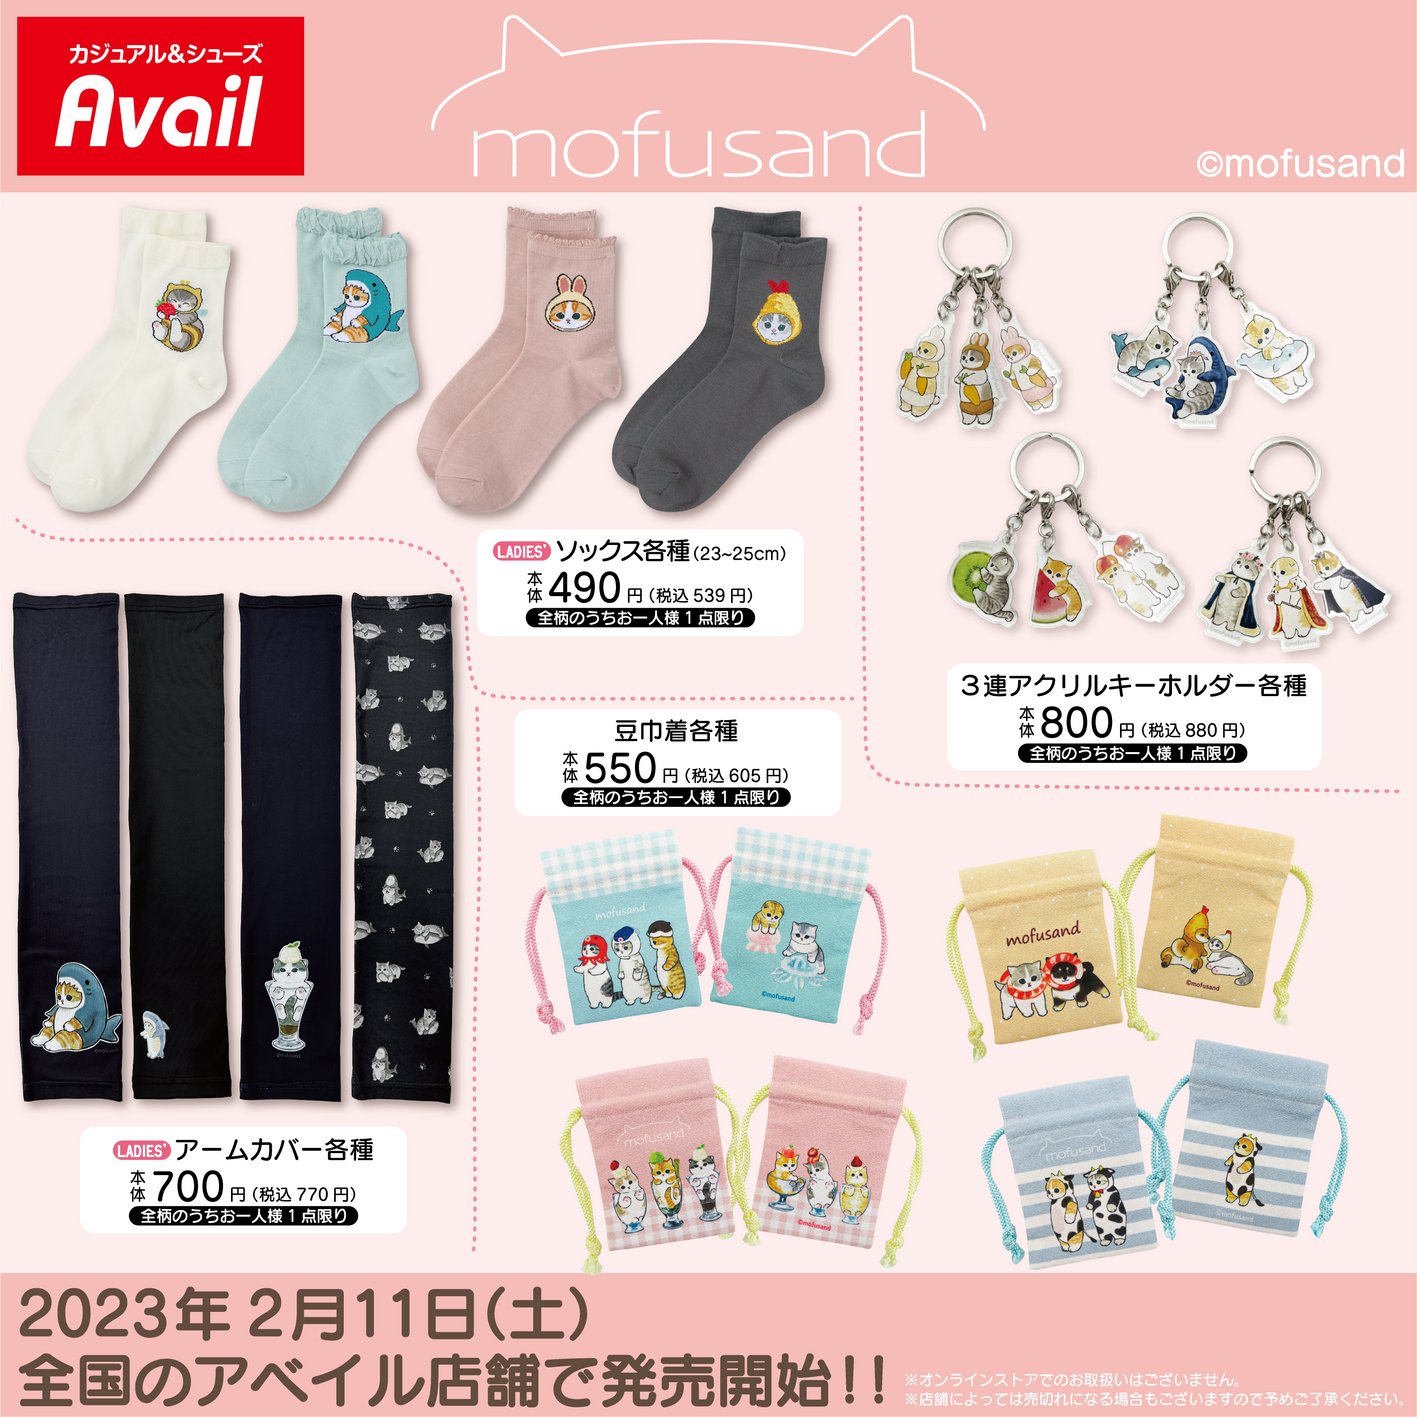 mofusand × Avail (アベイル) 全国 ソックスや巾着など 2月11日より発売!